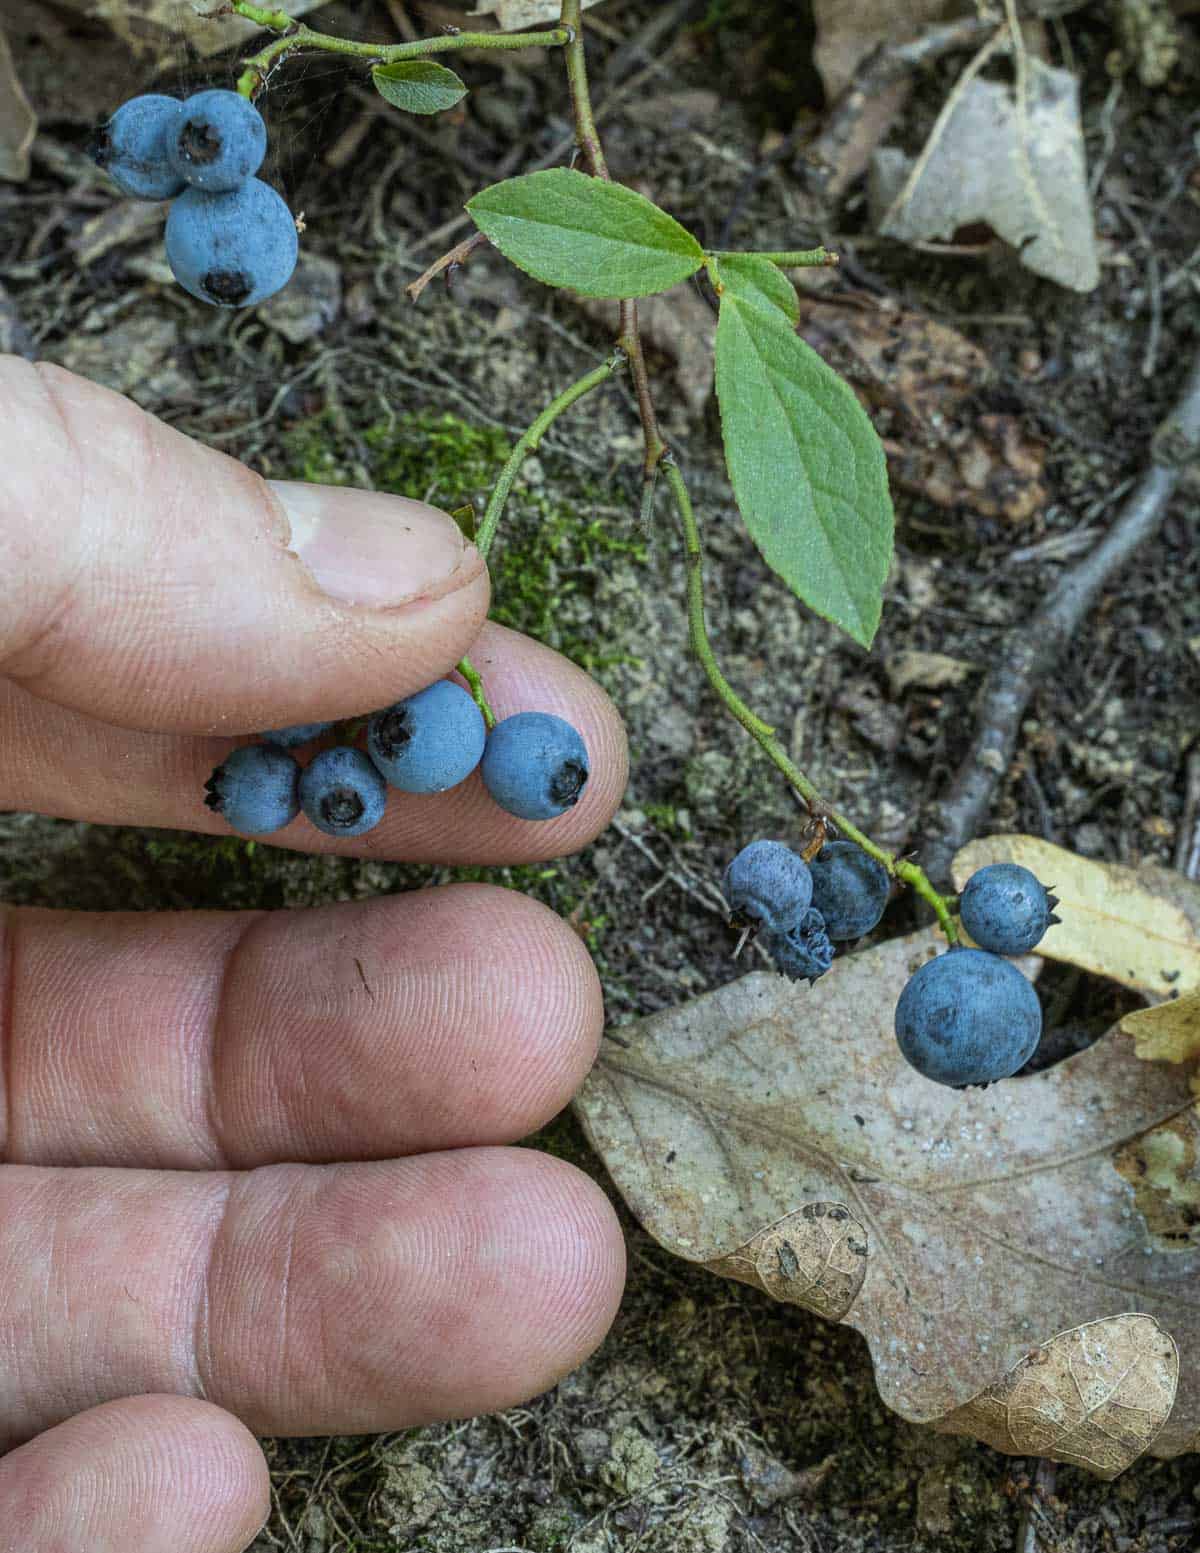 Picking wild blueberries by hand. 